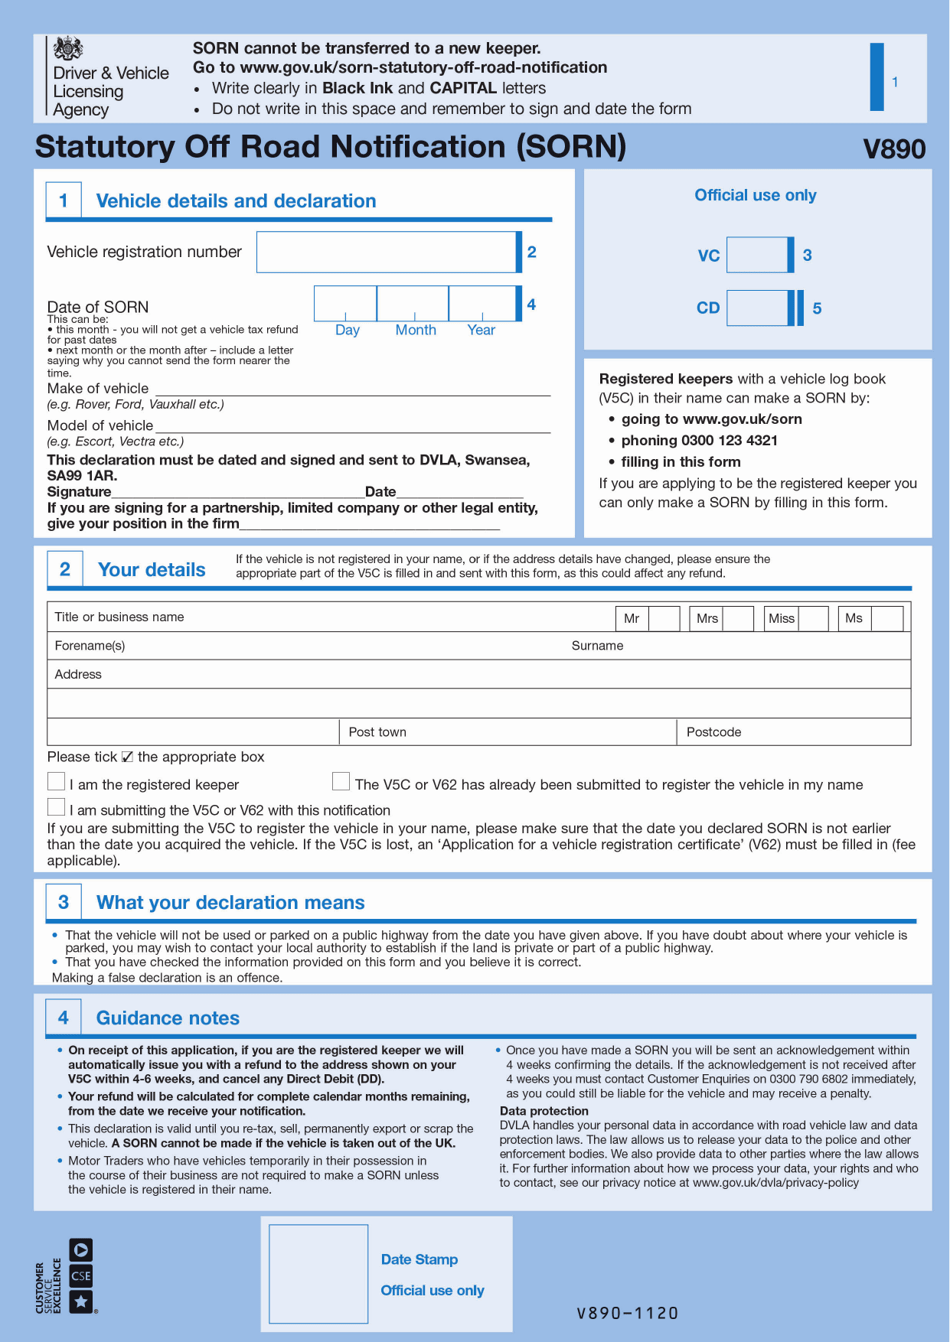 Form V890 Statutory off Road Notification (Sorn) - United Kingdom, Page 1